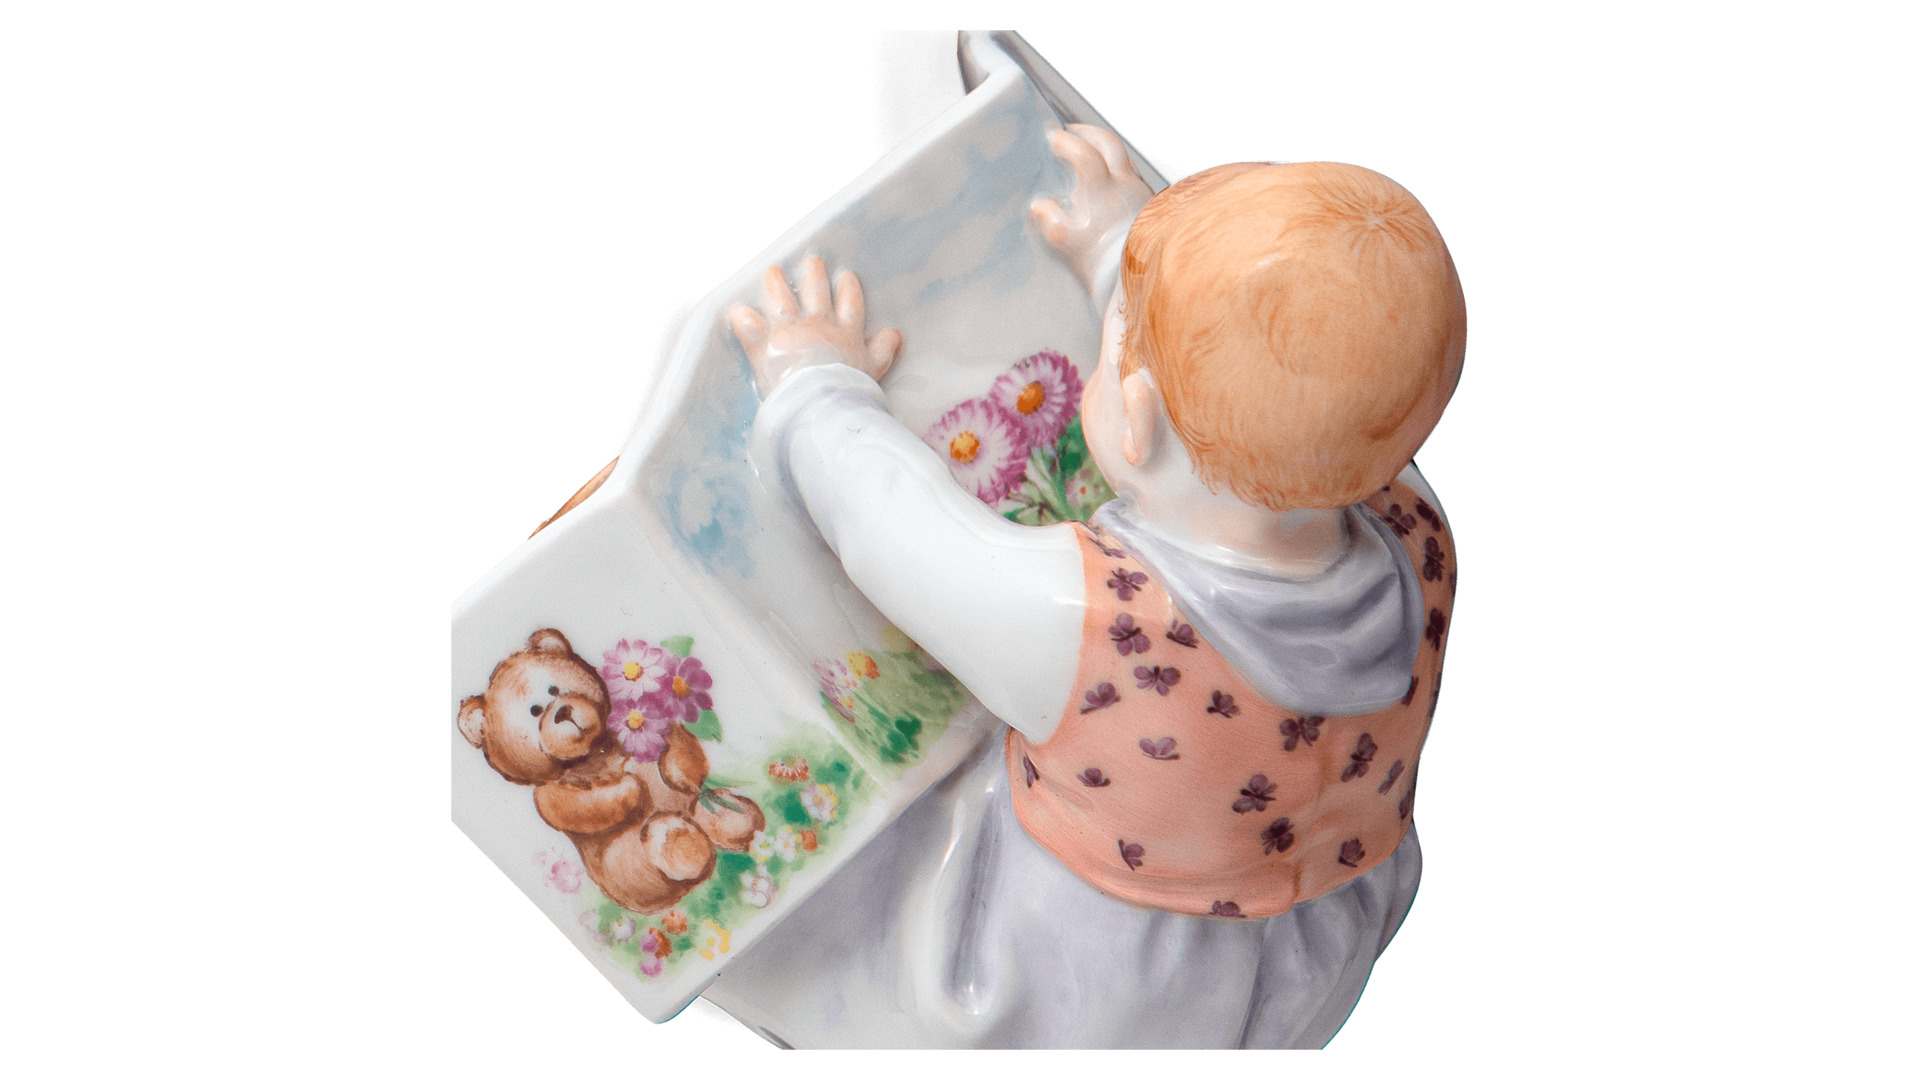 Фигурка Meissen Ребенок с книжкой 7 см, фарфор